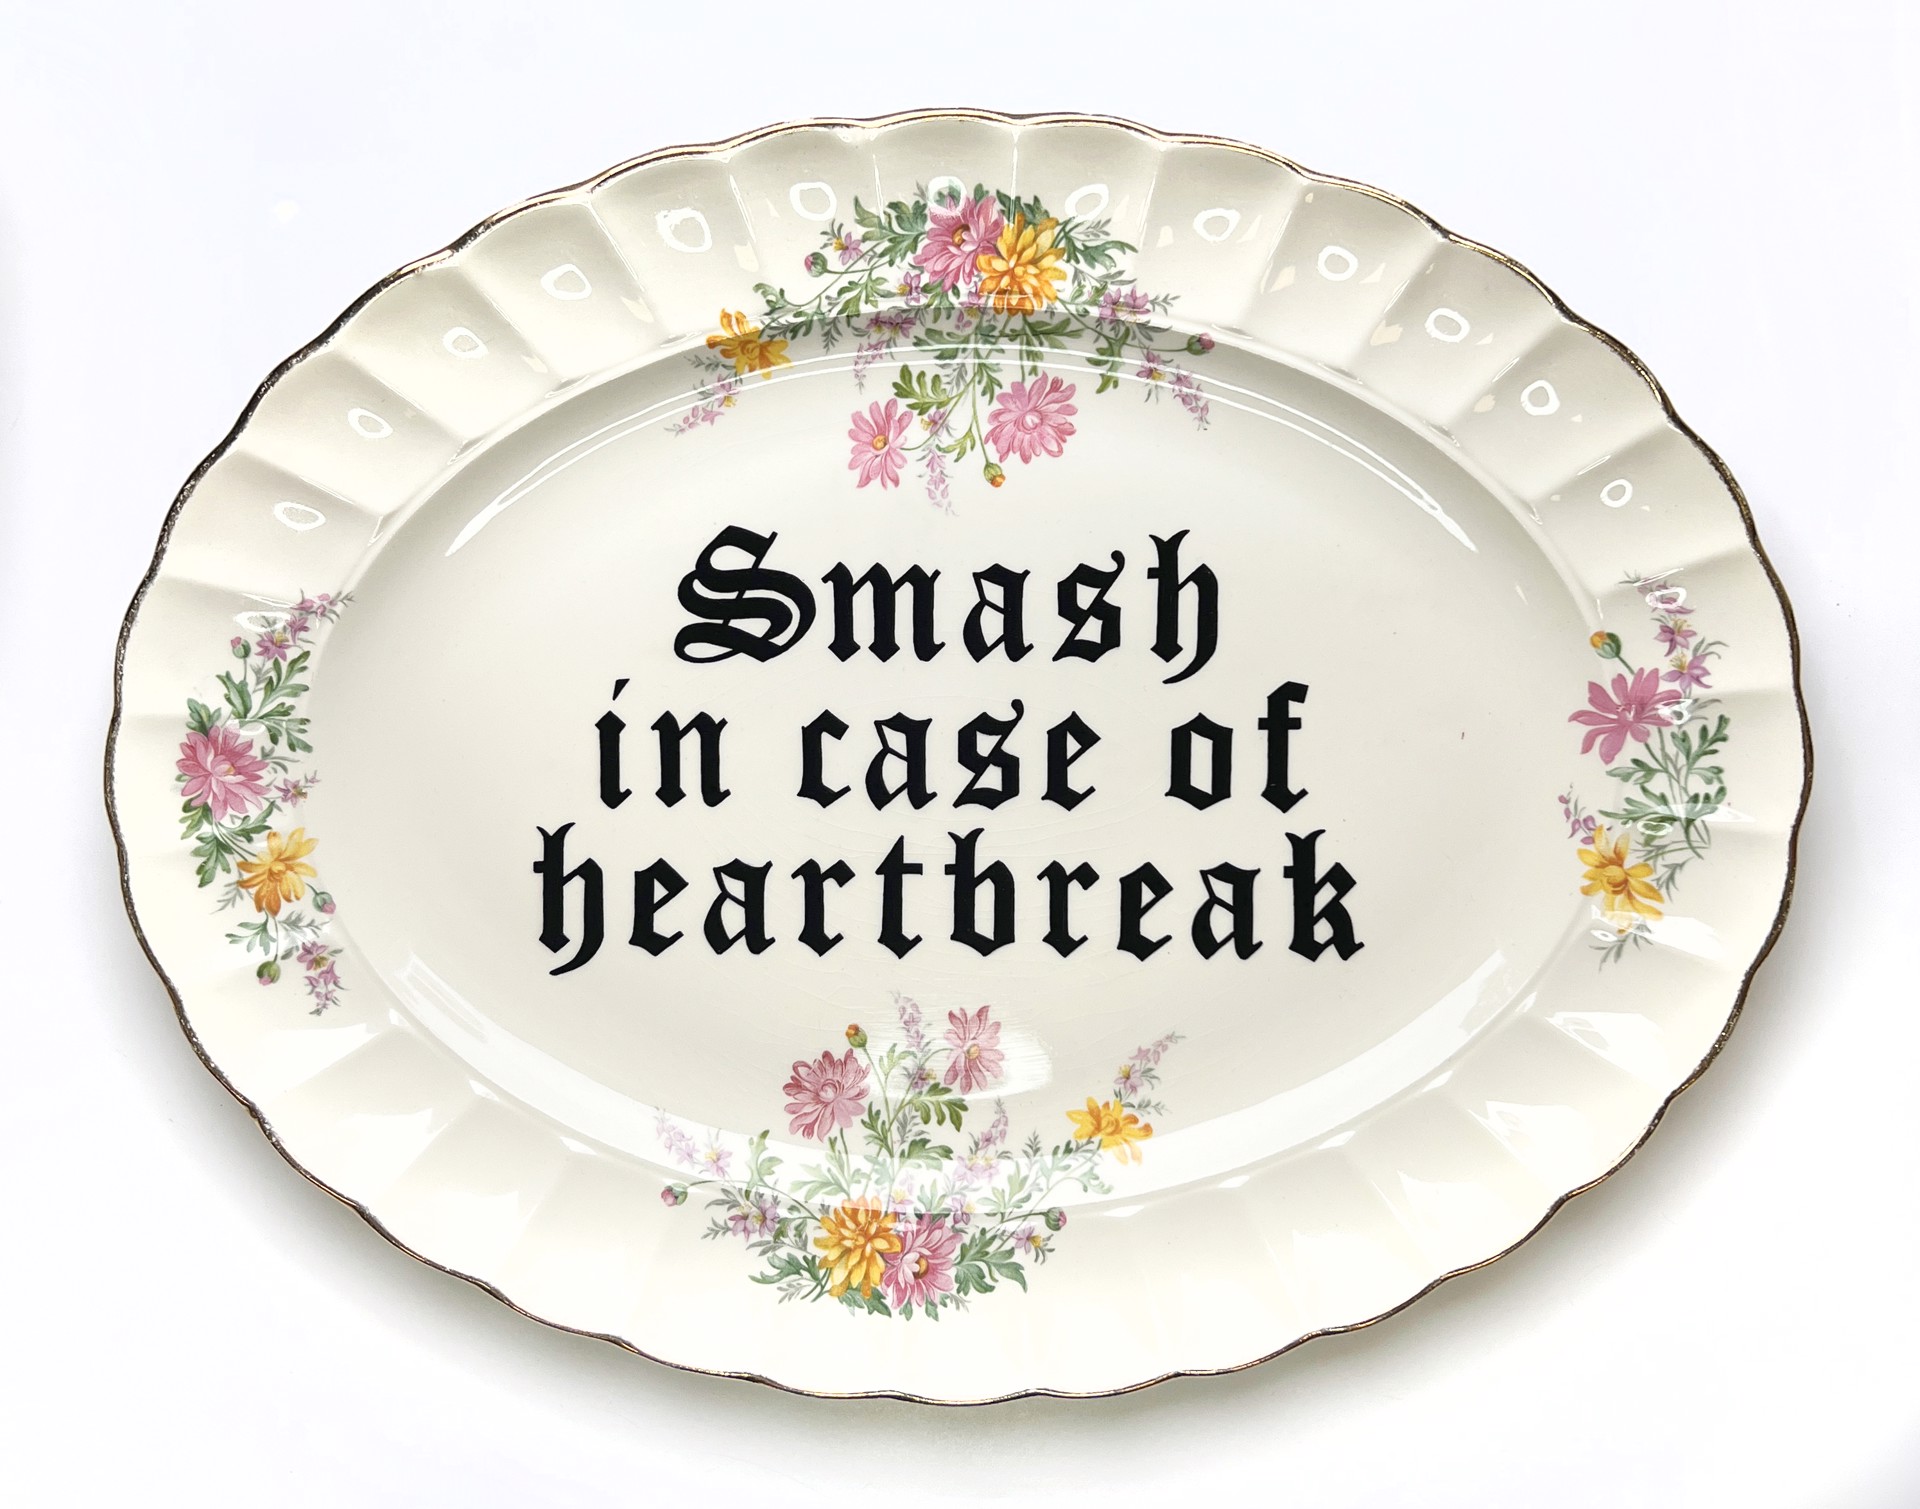 Smash in case of heartbreak by Marie-Claude Marquis